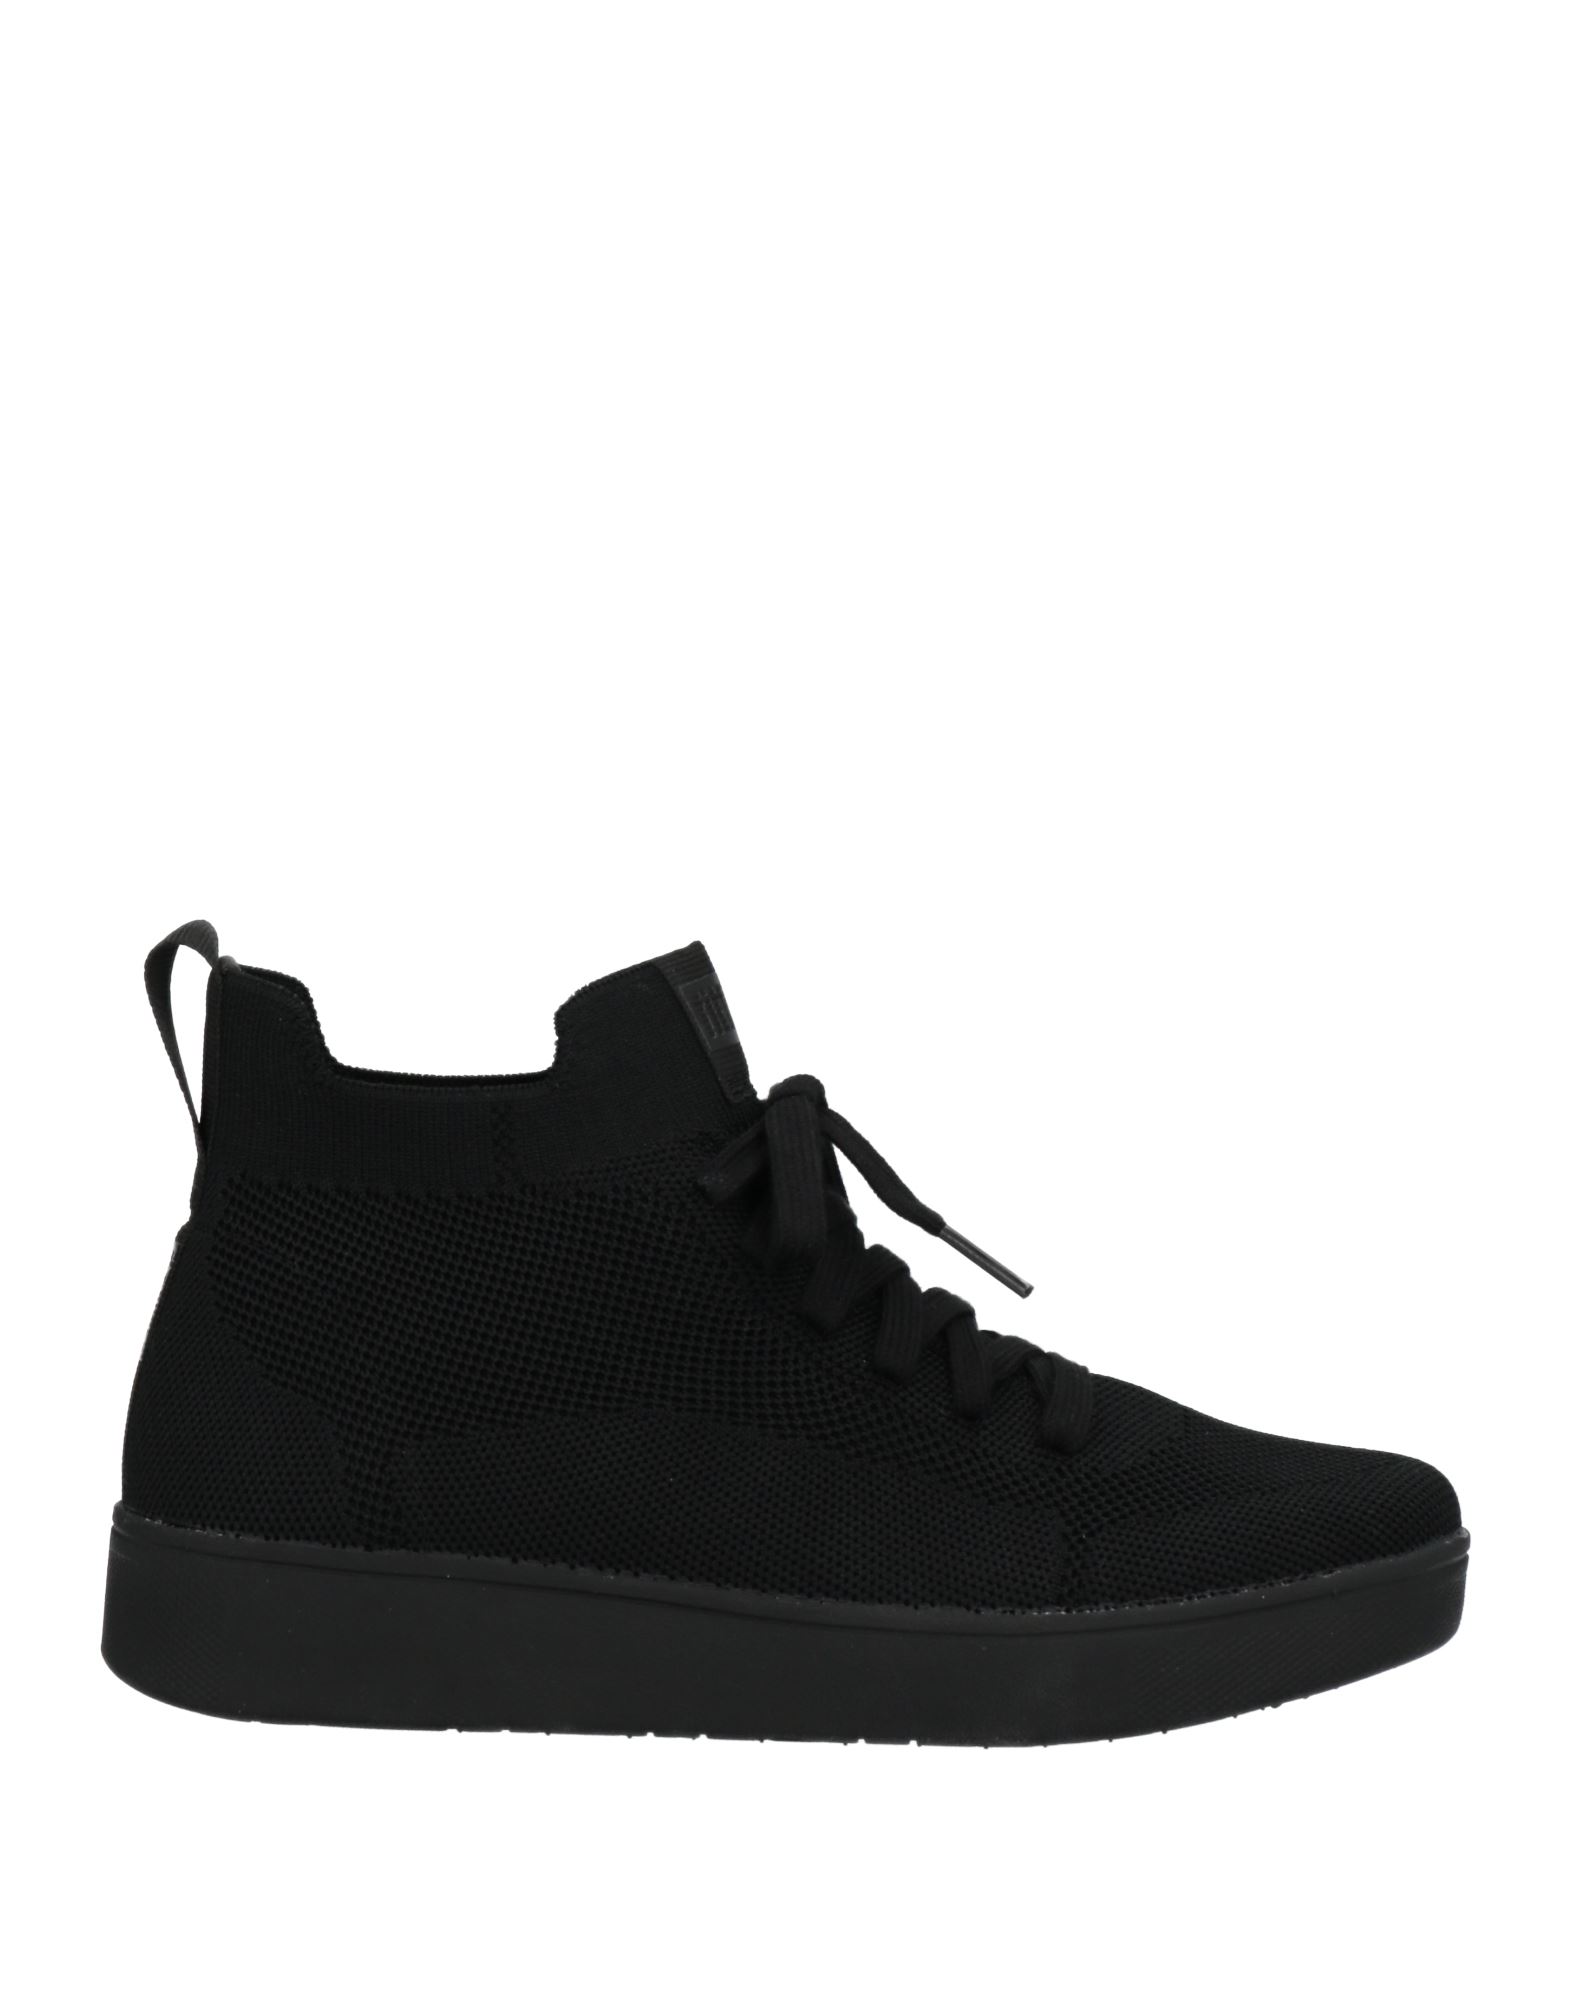 Fitflop Sneakers In Black